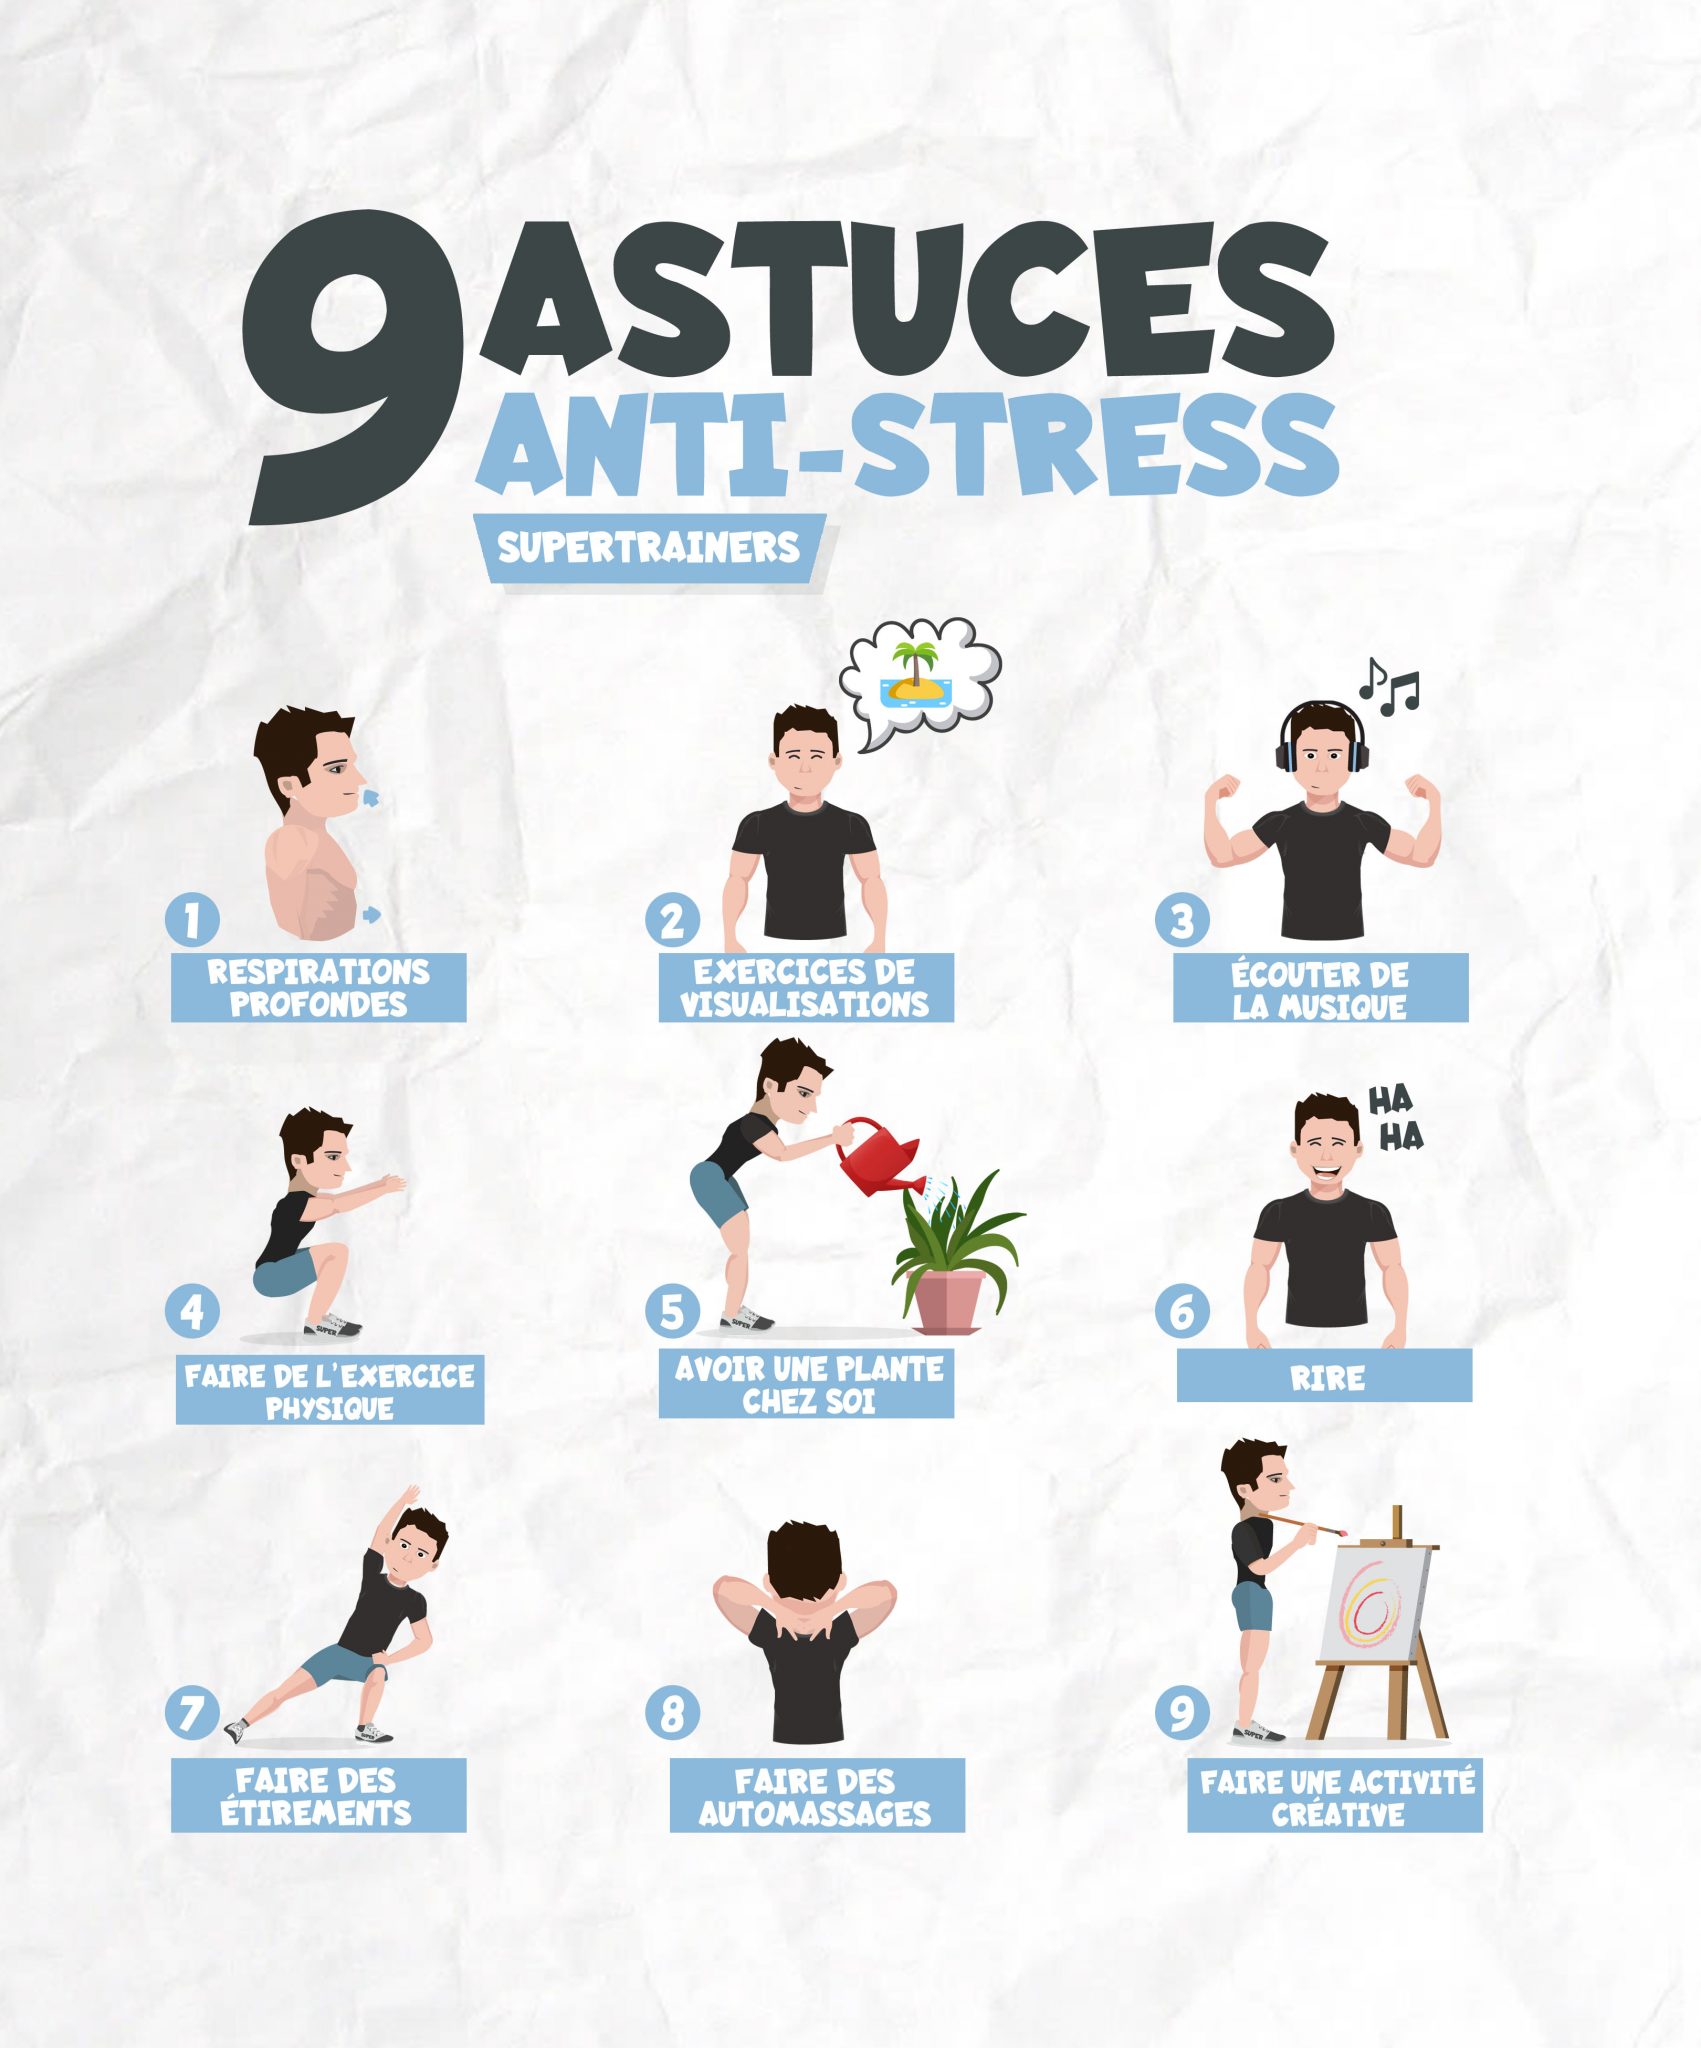 9 astuces anti stress  SUPERTRAINERS